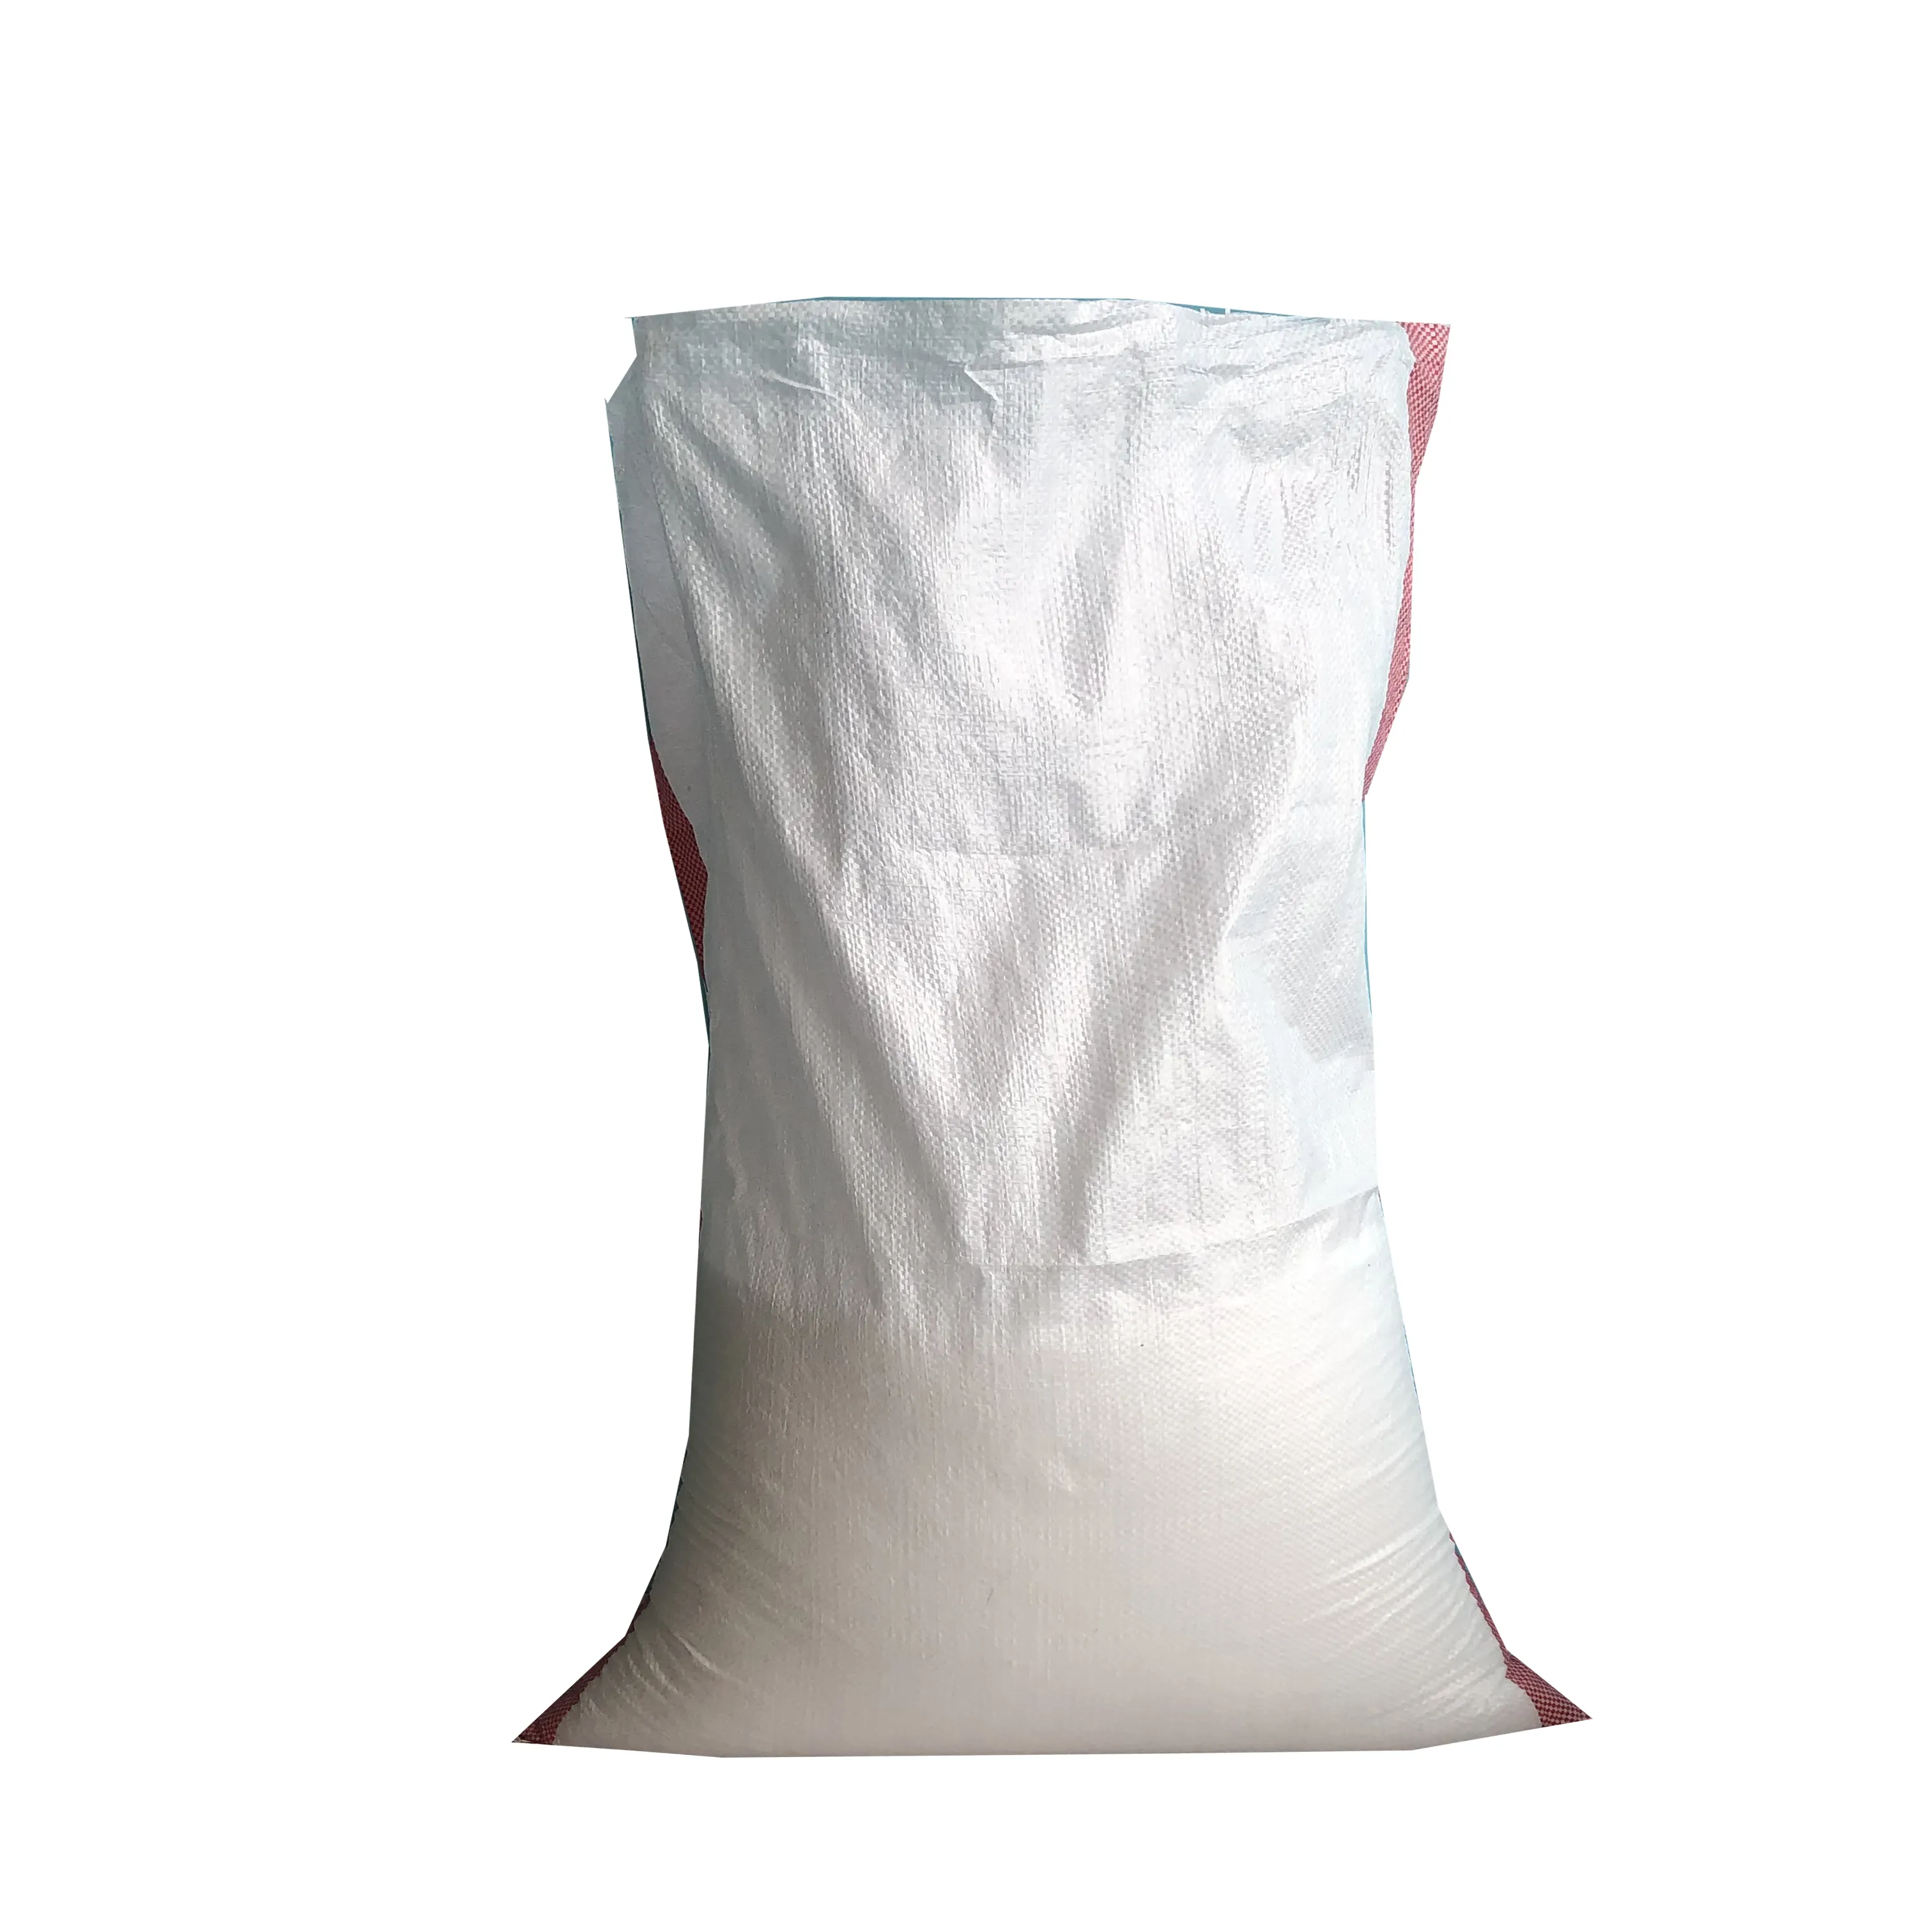 Hot Sale 25kg 50kg 100kg Saco De Rafia Plastic Polypropylene Bag PP Woven Sack For Rice Grain Wheat Maize Beans Packaging Used